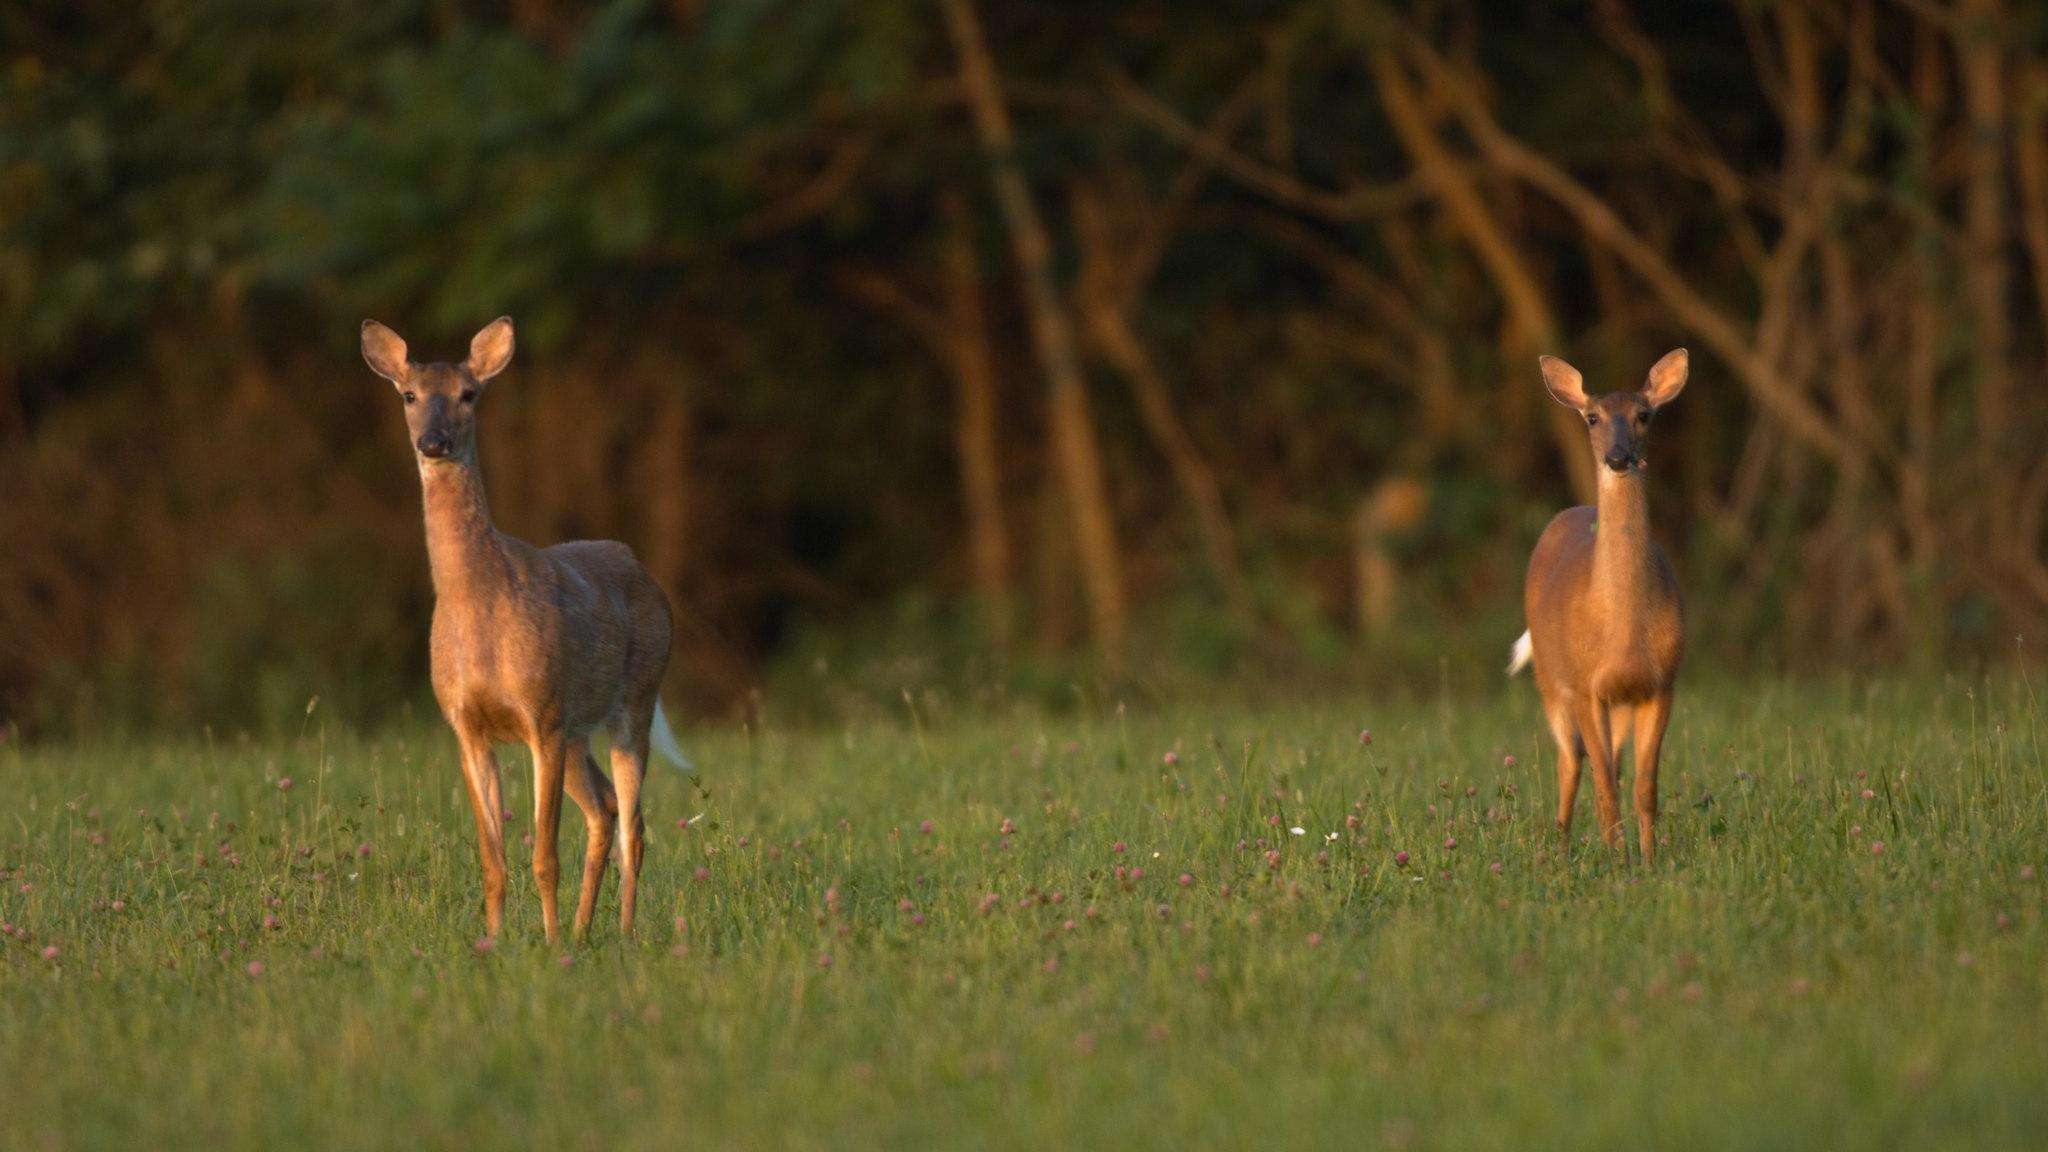 Two deer standing in a field